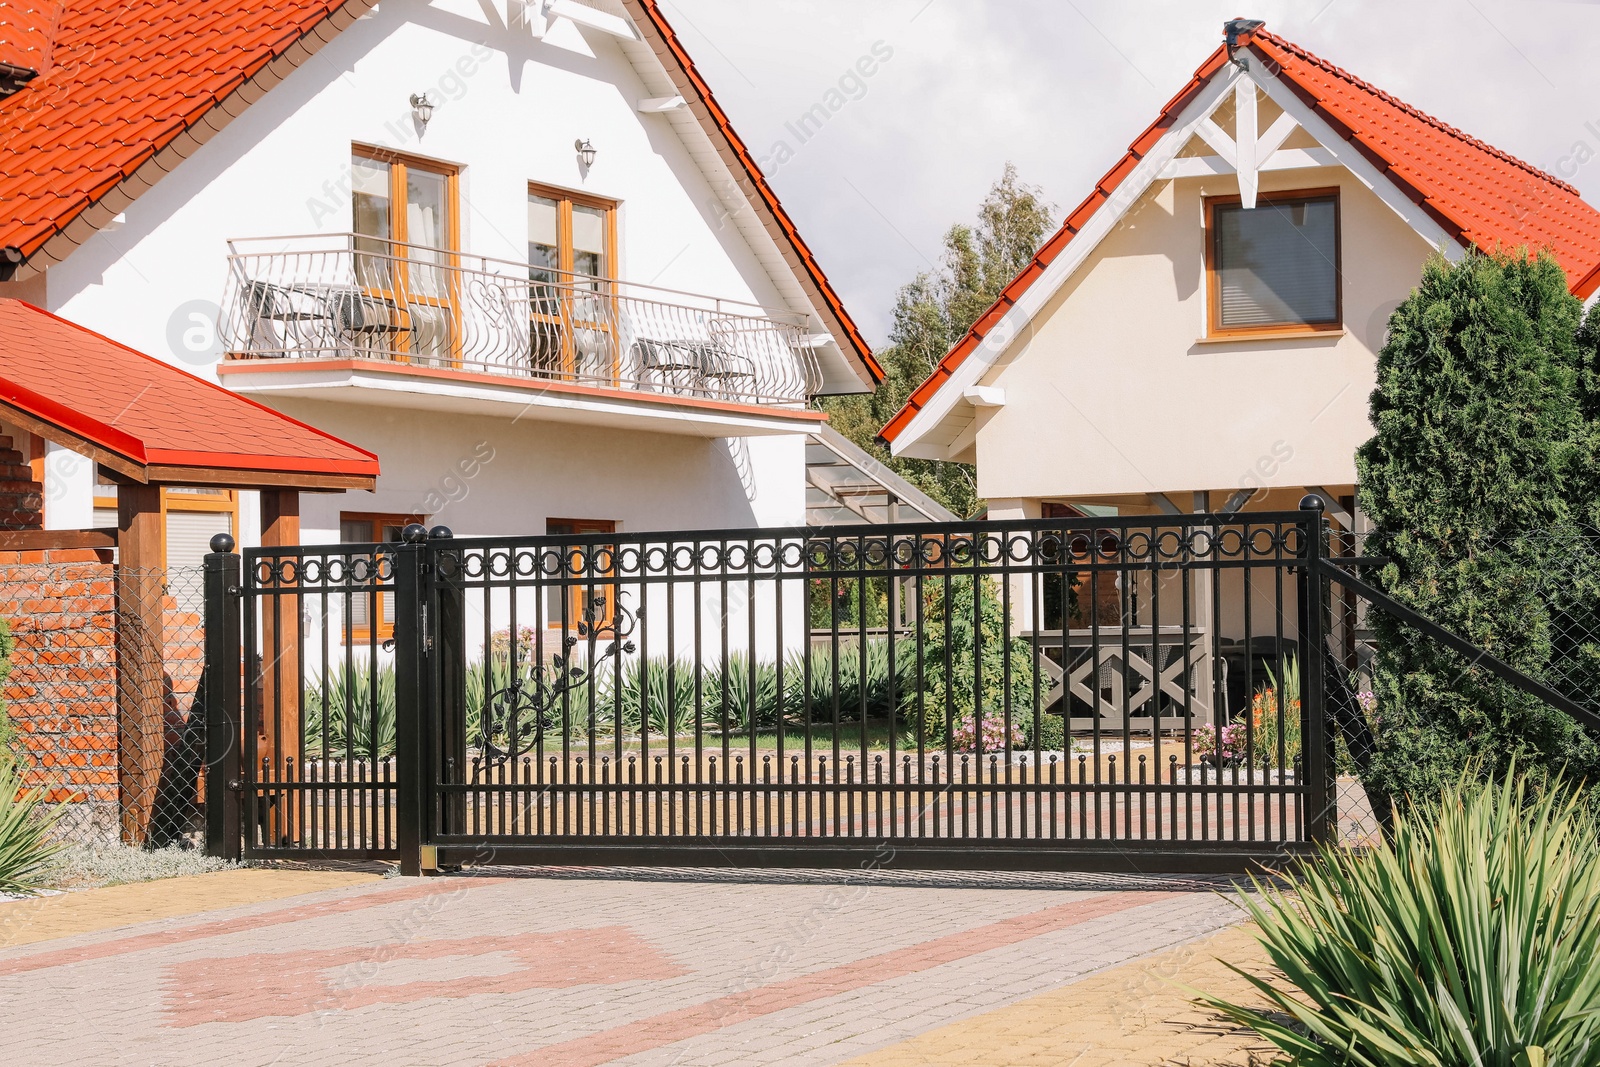 Photo of Closed metal gates near beautiful houses outdoors